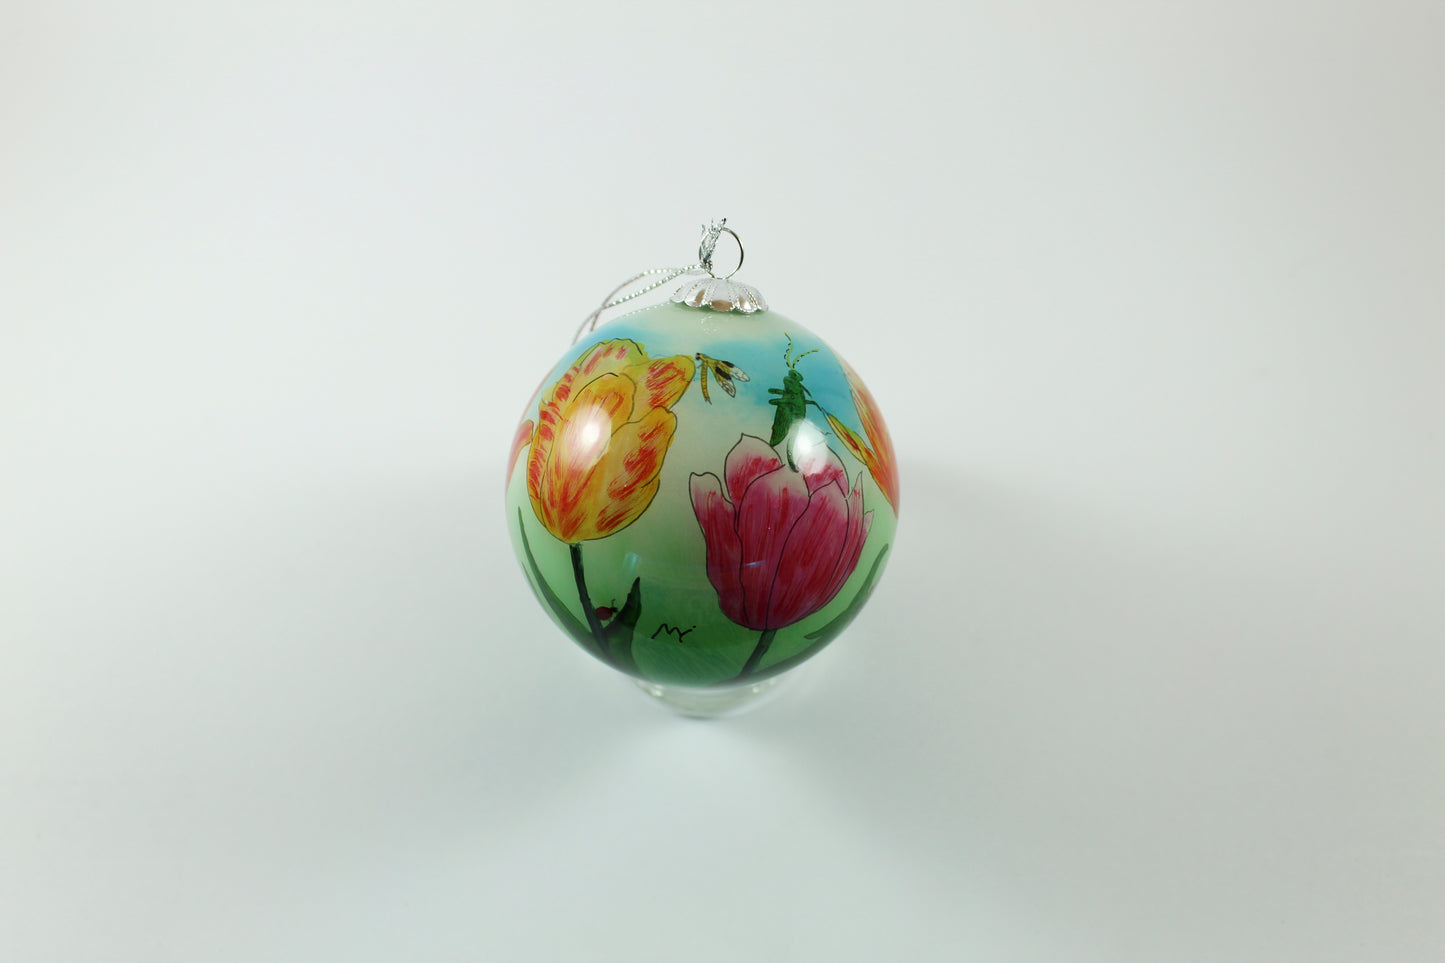 Amsterdam Tulip Museum Tulip Fields Hand-Painted Glass Tree Ornament